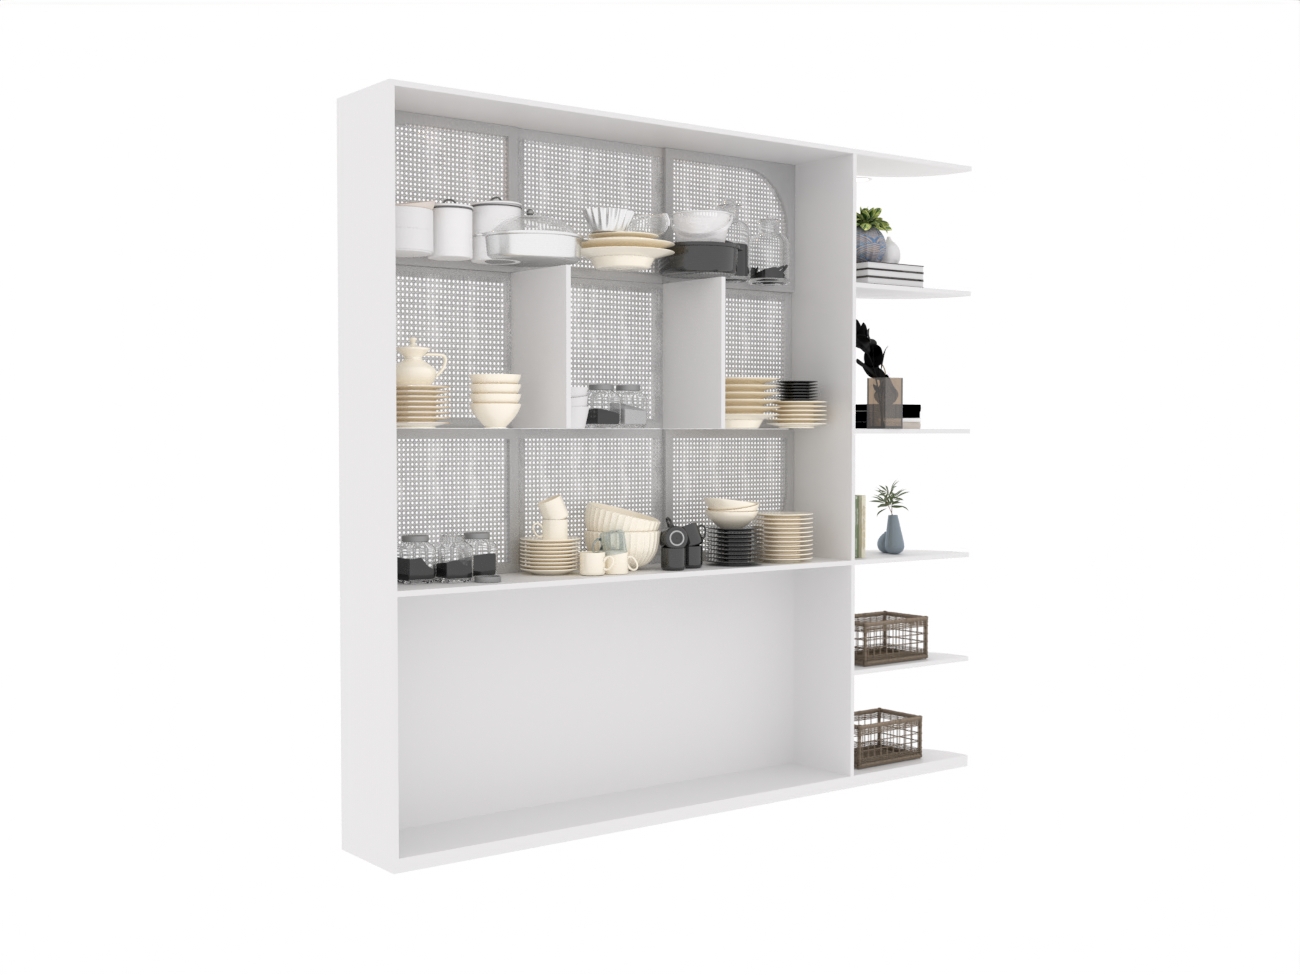 9965. Download Free Display Cabinets Model by Luu Dao Tu